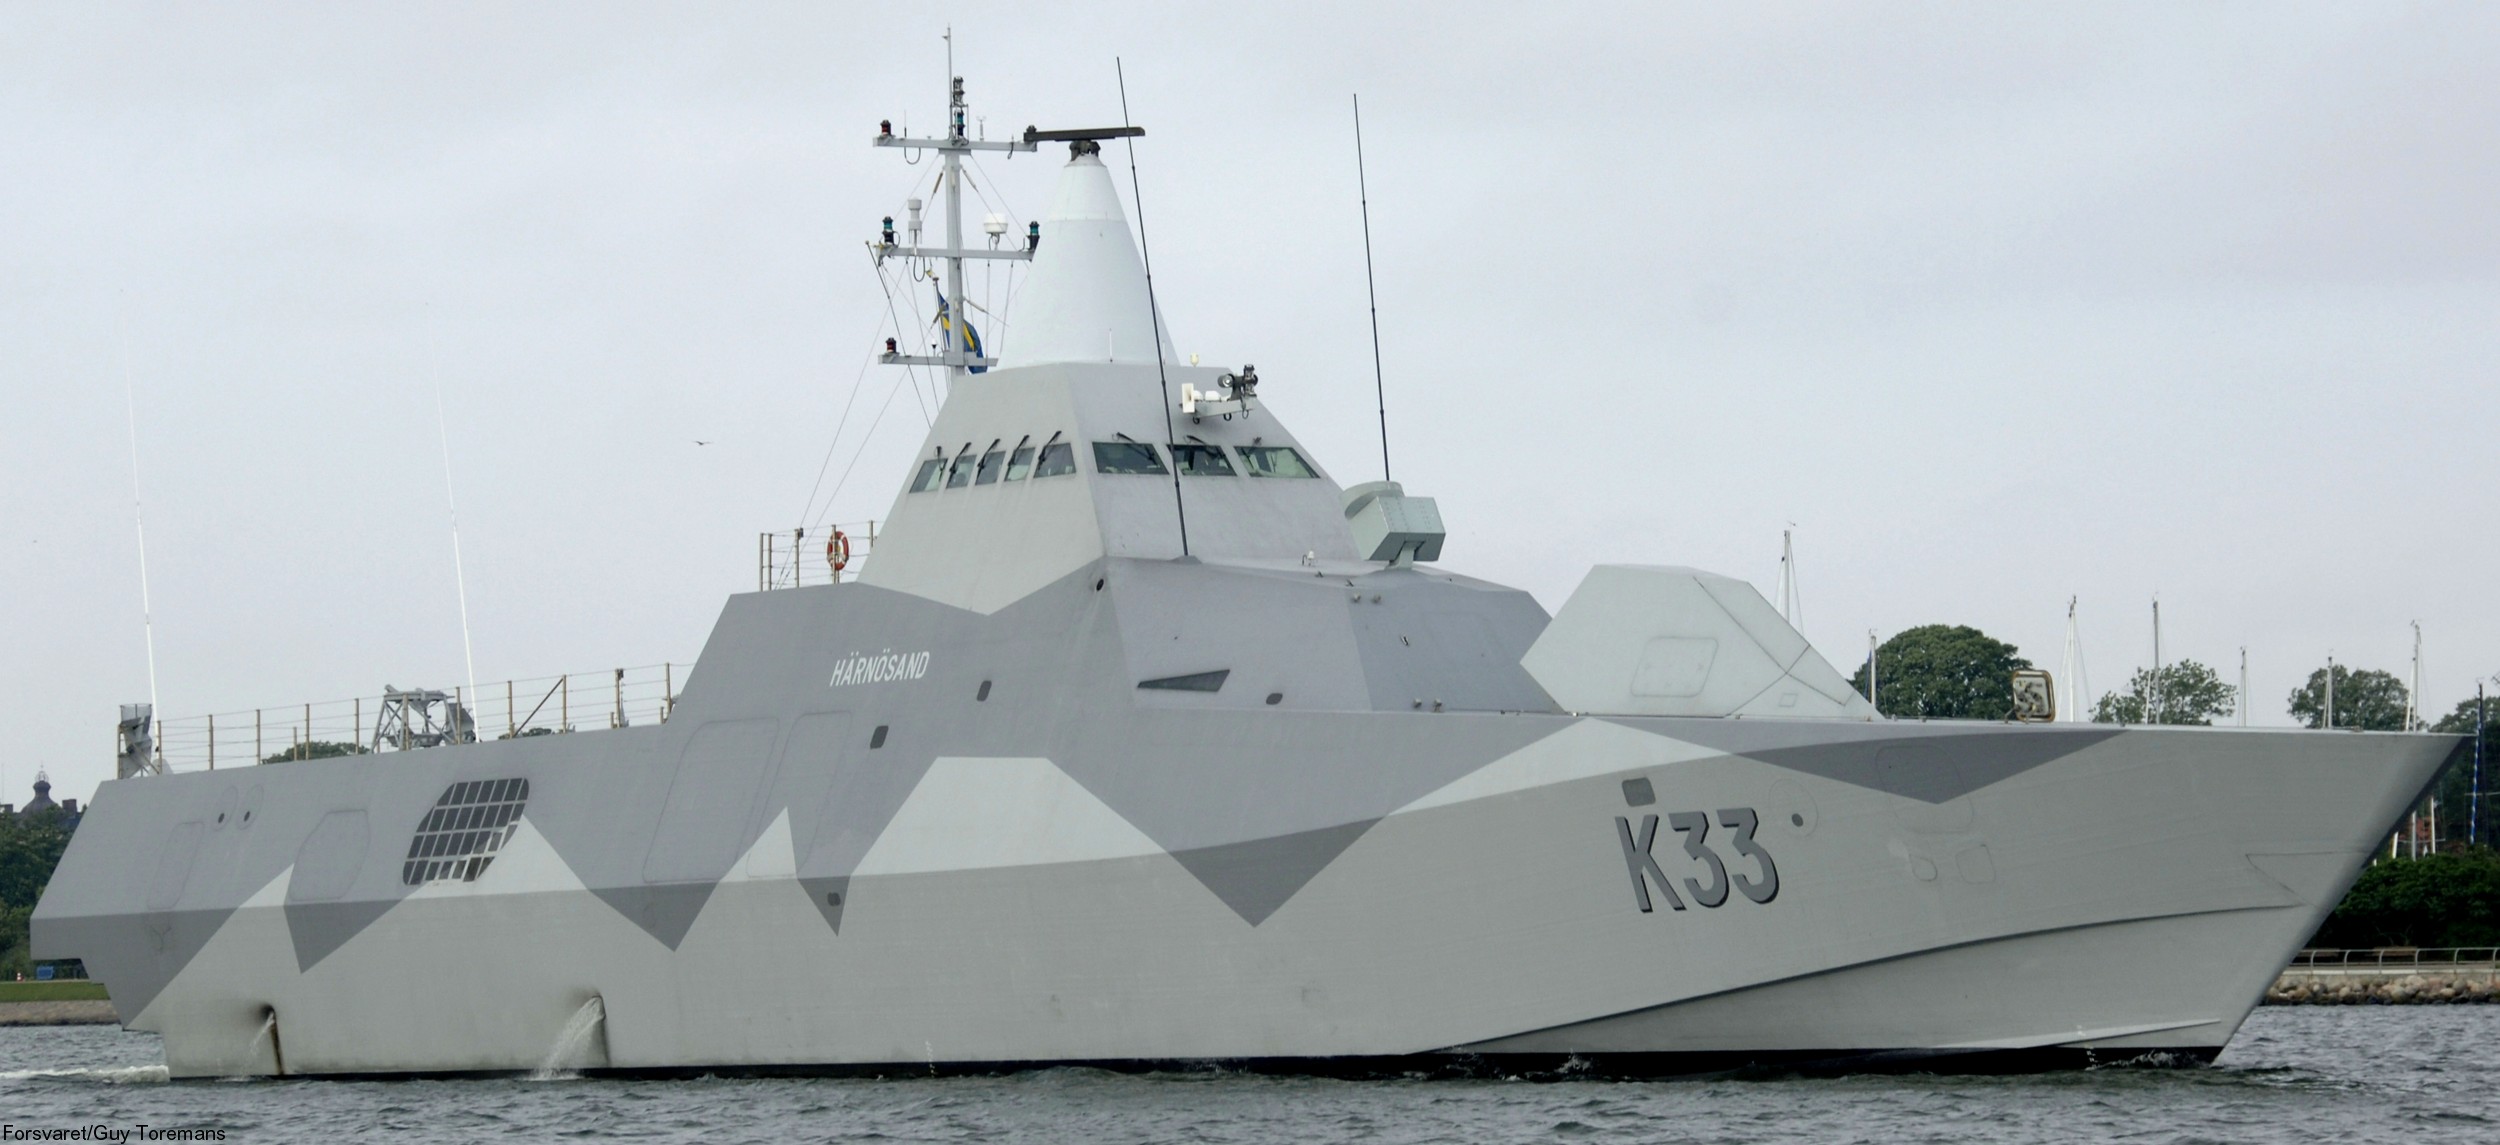 k33 hswms hms harnosand visby class corvette royal swedish navy svenska marinen 21